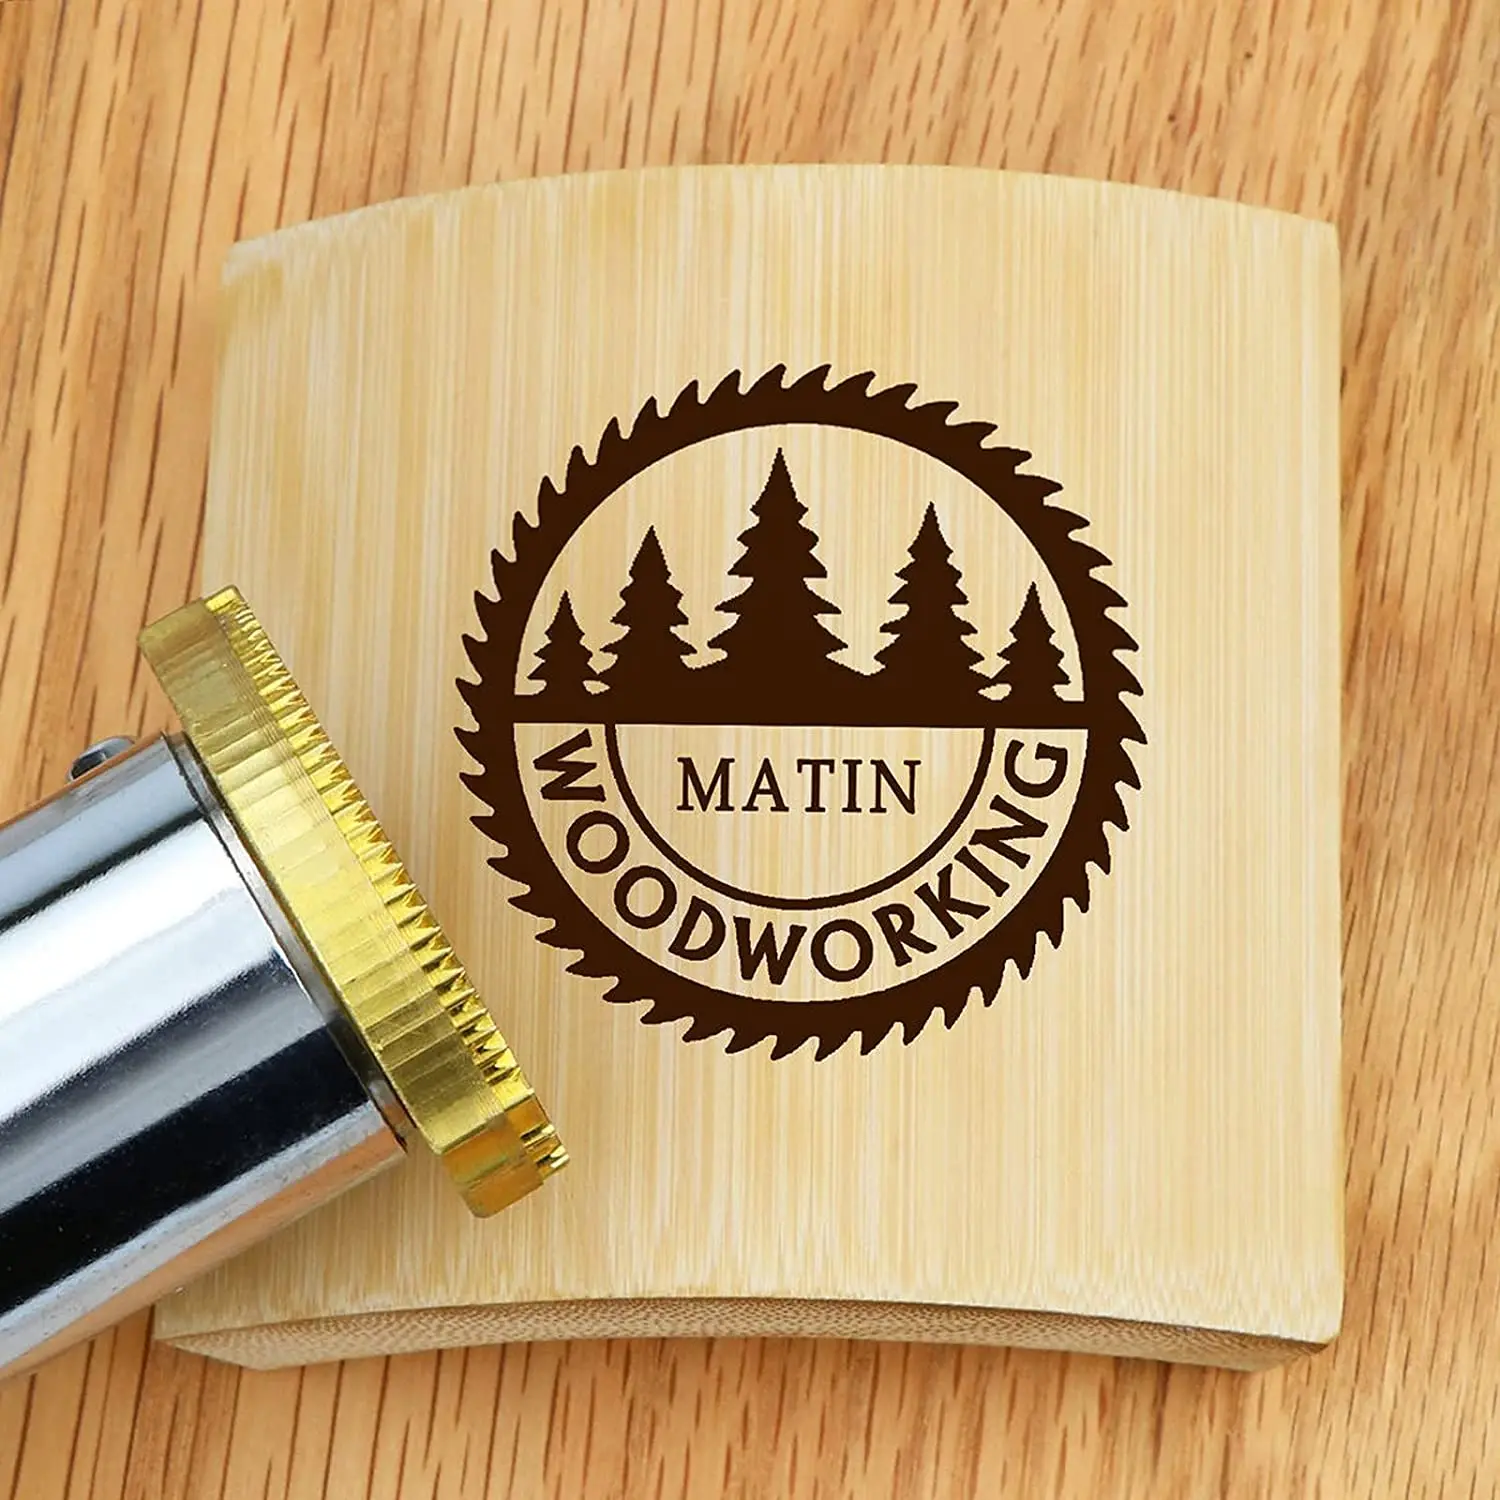 custom electric branding iron, customize wood